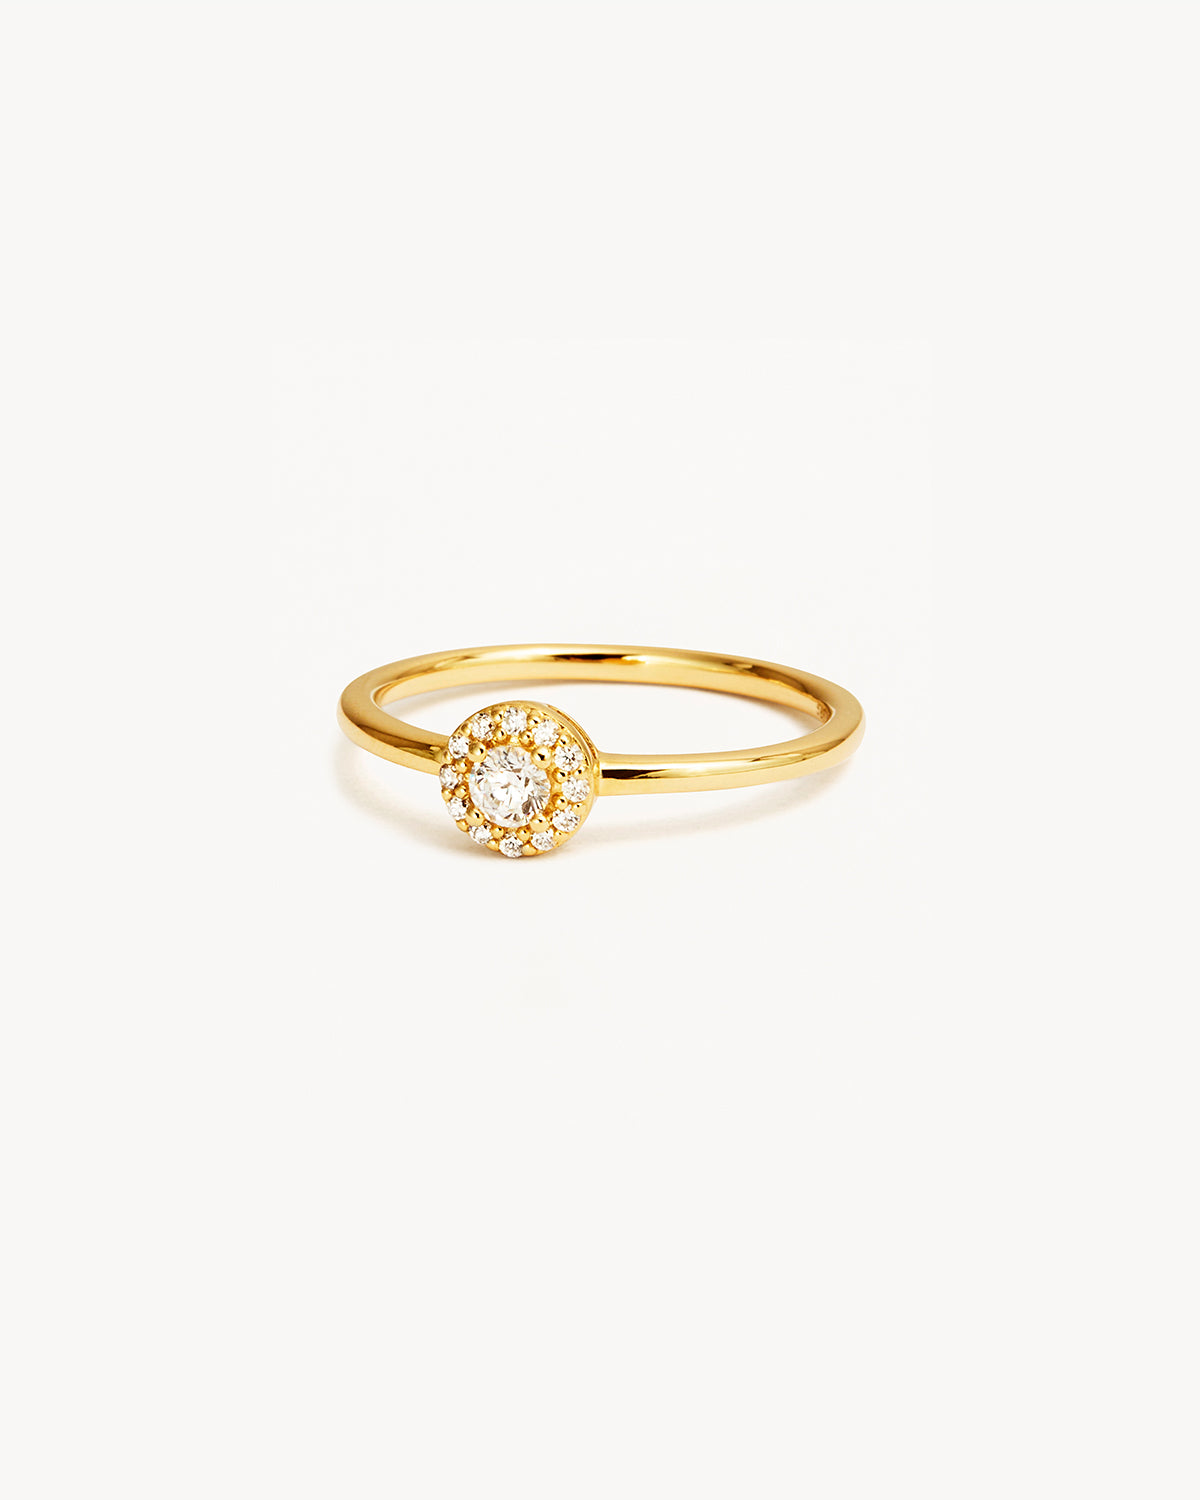 Diamond Engagement Ring Yellow Gold, Natural Diamond Wedding Ring, Halo  Pave 1.03 Carat Certified Handmade